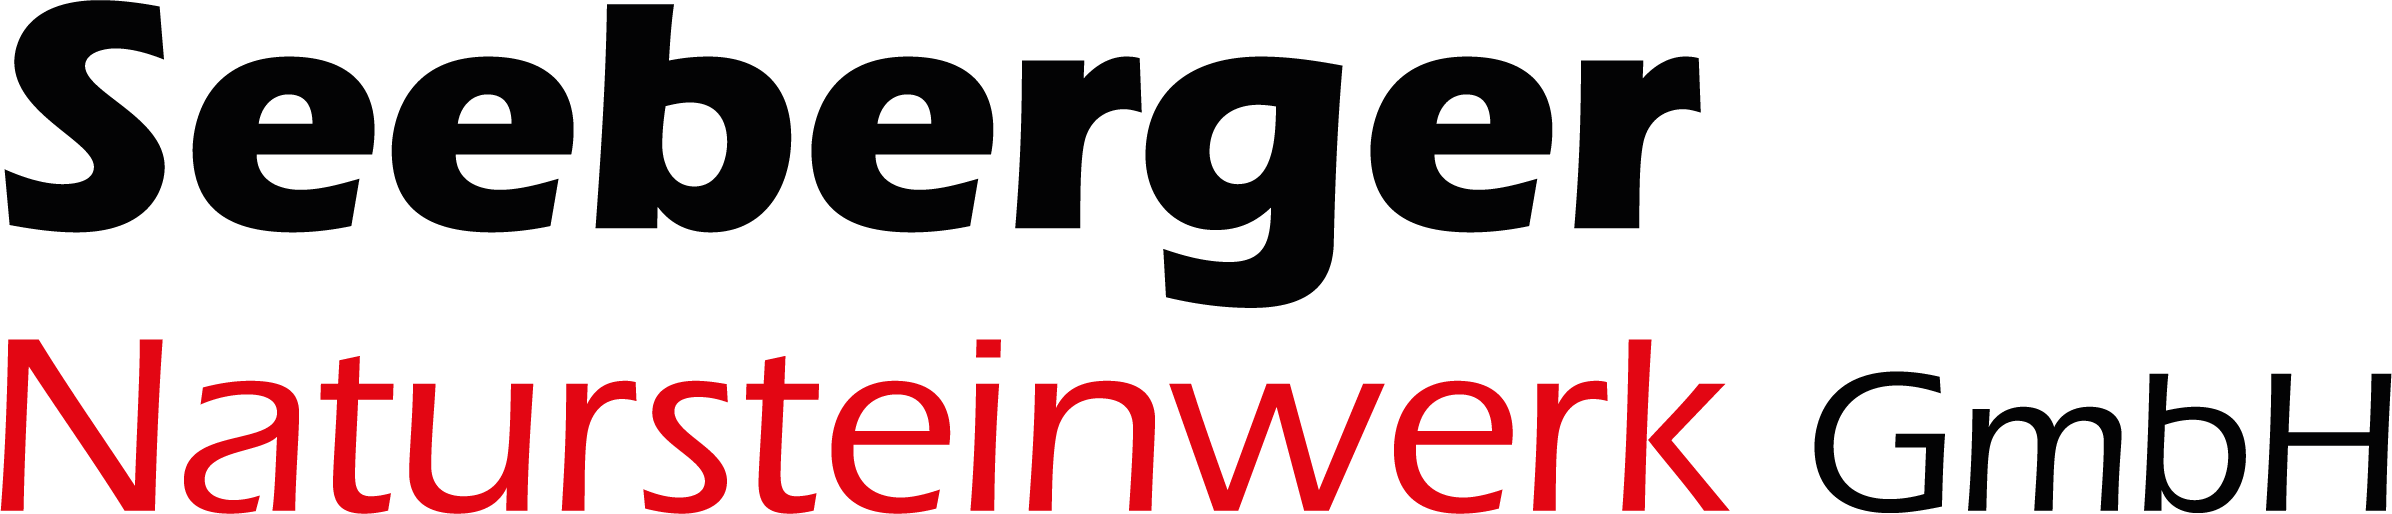 Seeberger Natursteinwerk Logo - ohne claim